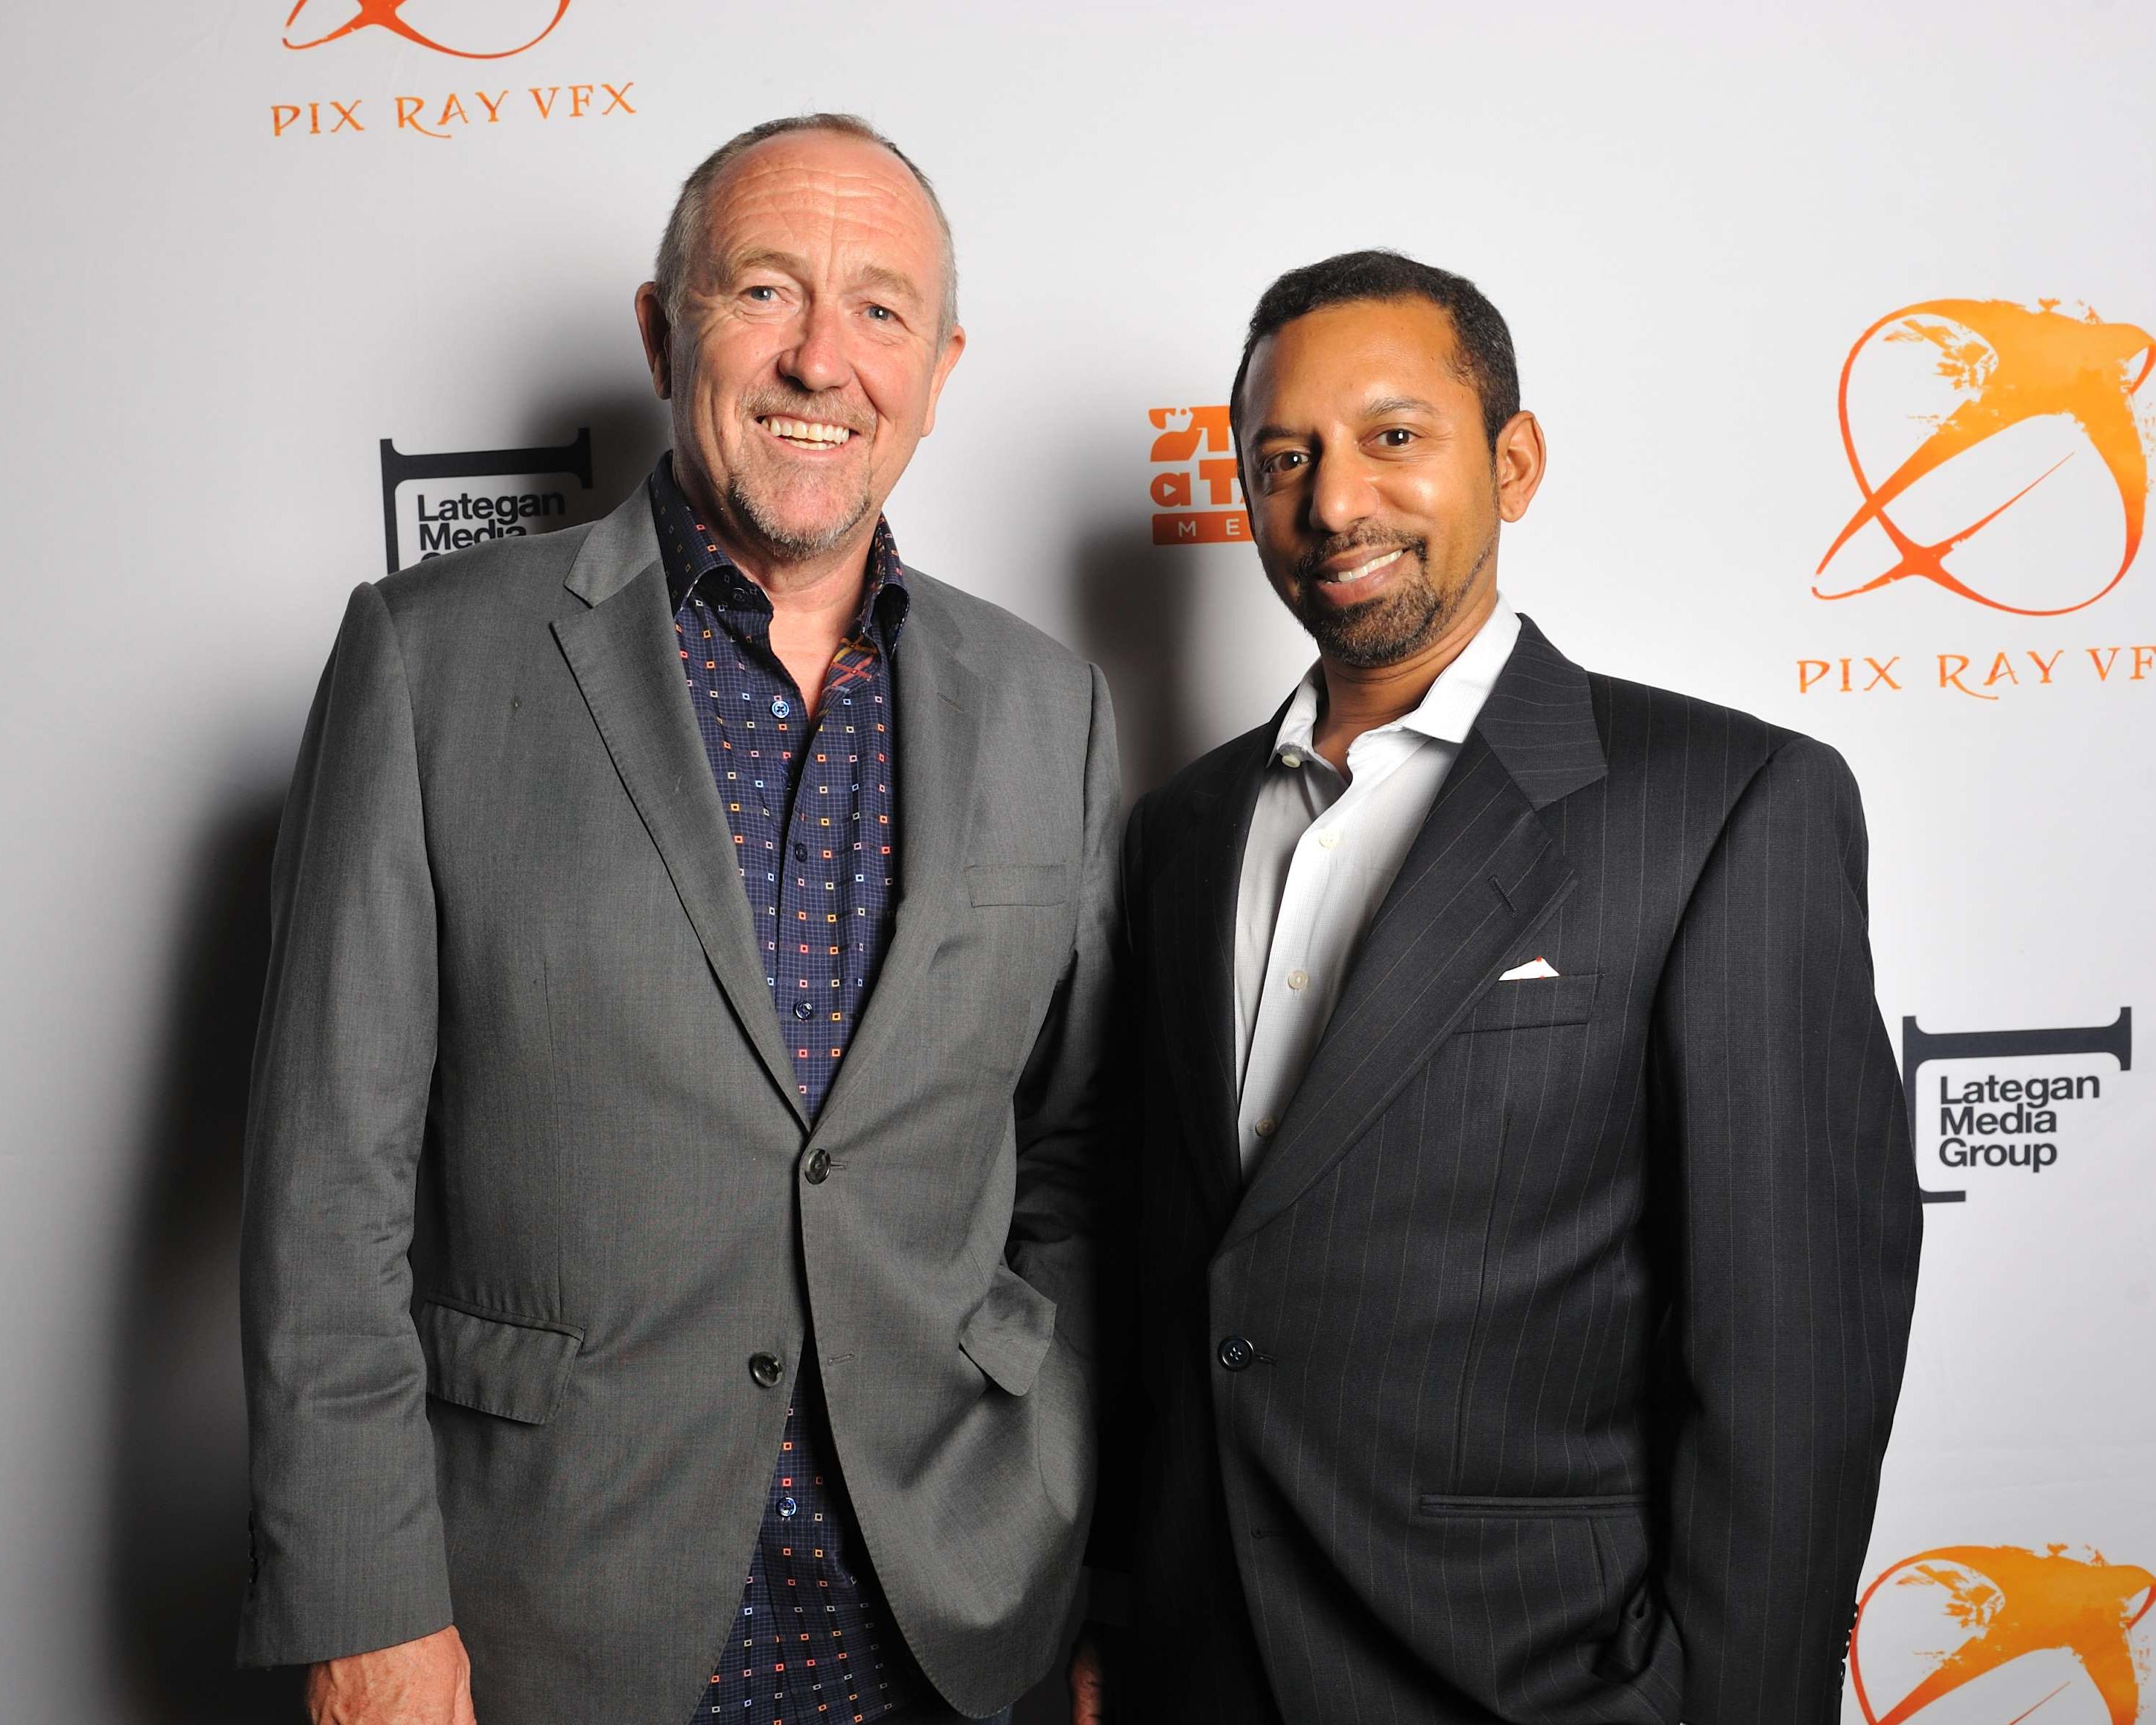 Mark Whelan and Stephen Lategan at the Pix Ray VFX/Lategan Media Group International Filmmakers Reception (2015).